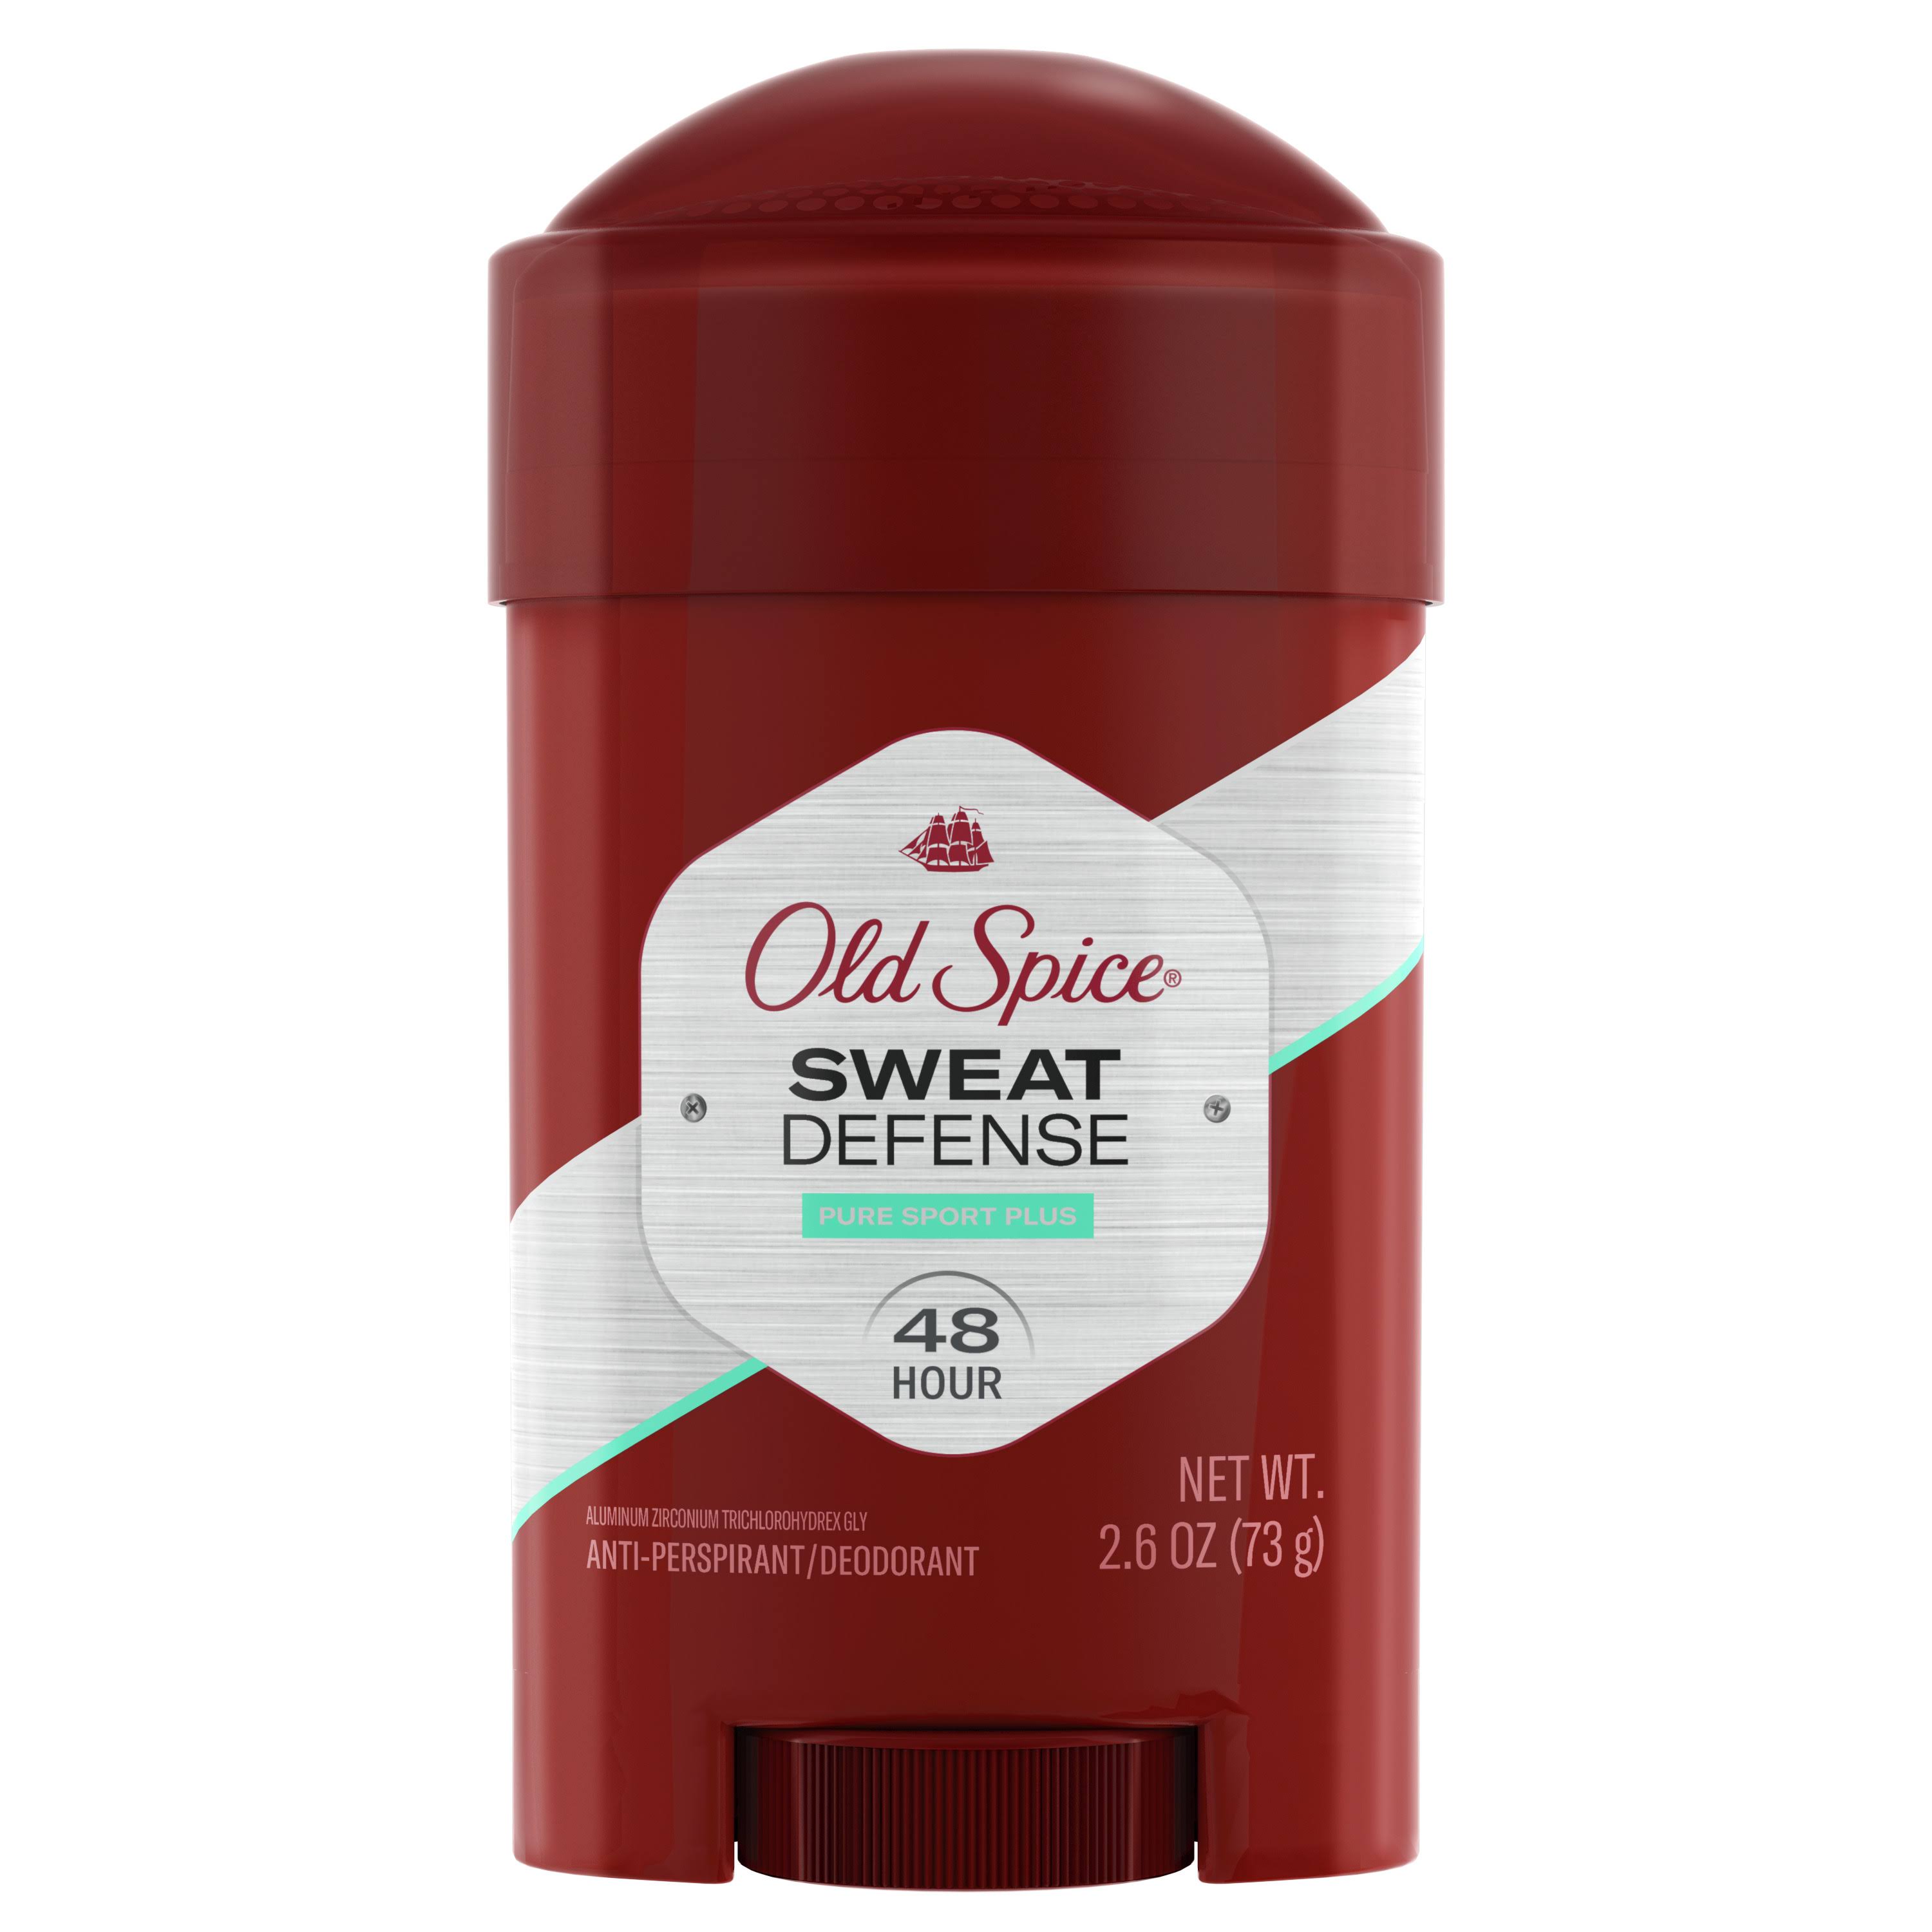 Old Spice Sweat Defense Deodorant - Pure Sport Plus, 2.6oz